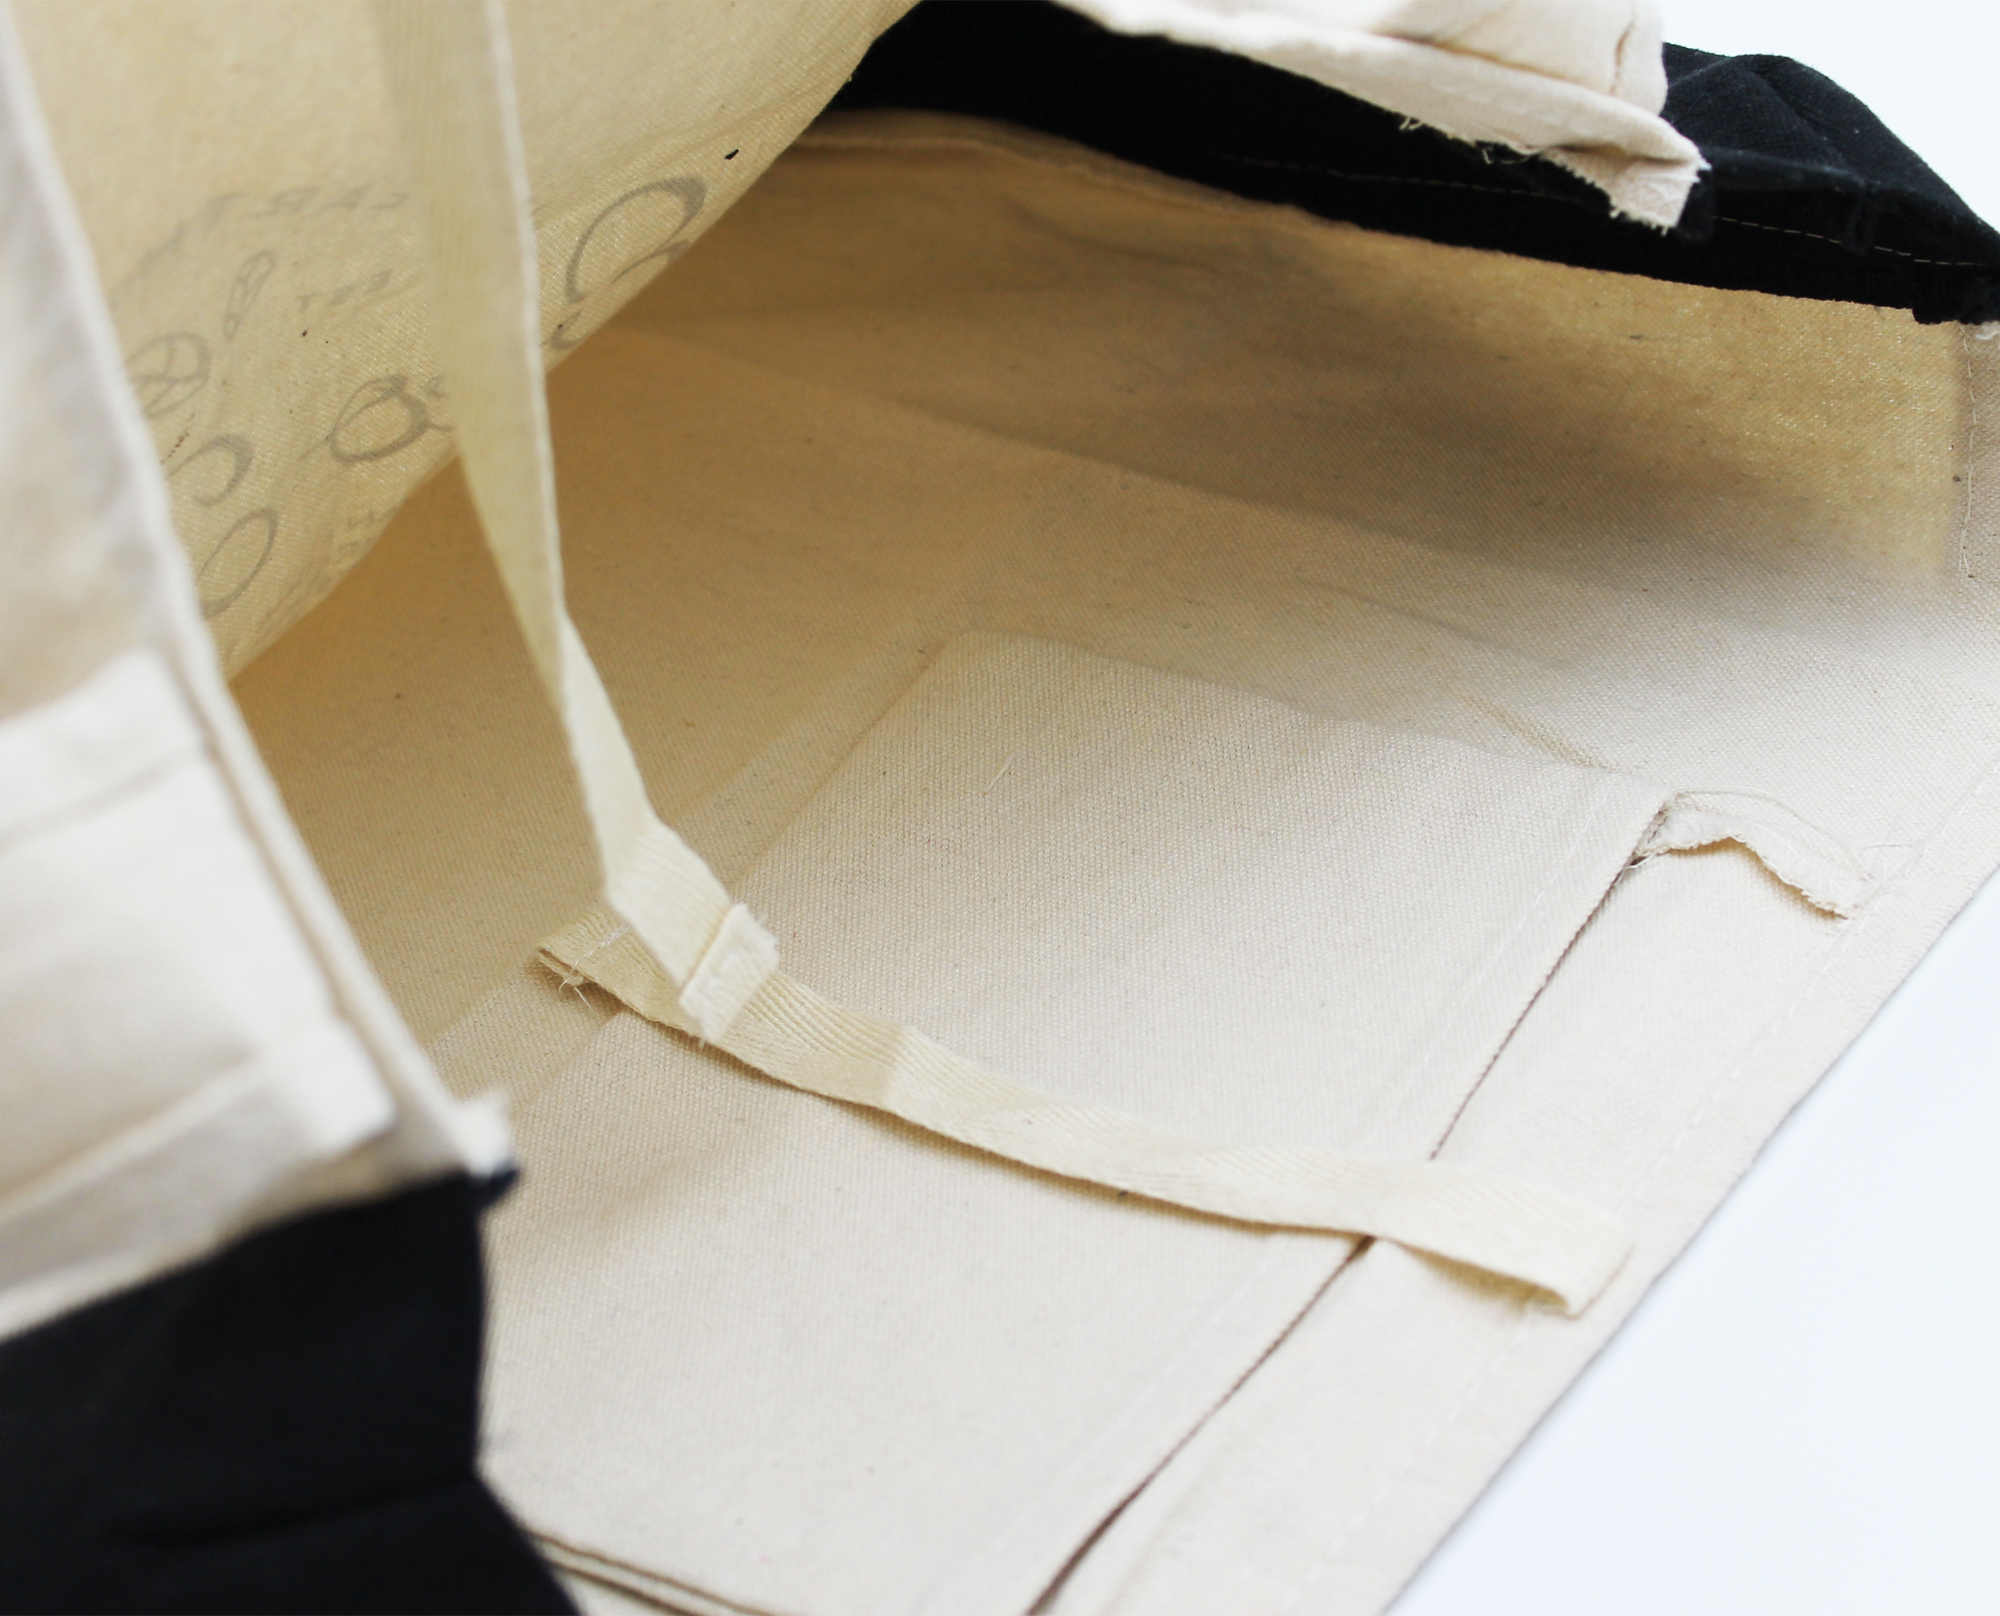 EcoJeannie (2 Bags) 100% Cotton Canvas Reusable Tote Bag w/Inner Pocket, Gusset and Closure Strips, Multi Use bag, Shoulder Bag, Travel Tote, Picnic Bag, 24-7 Bag, School Bag - image 3 of 4